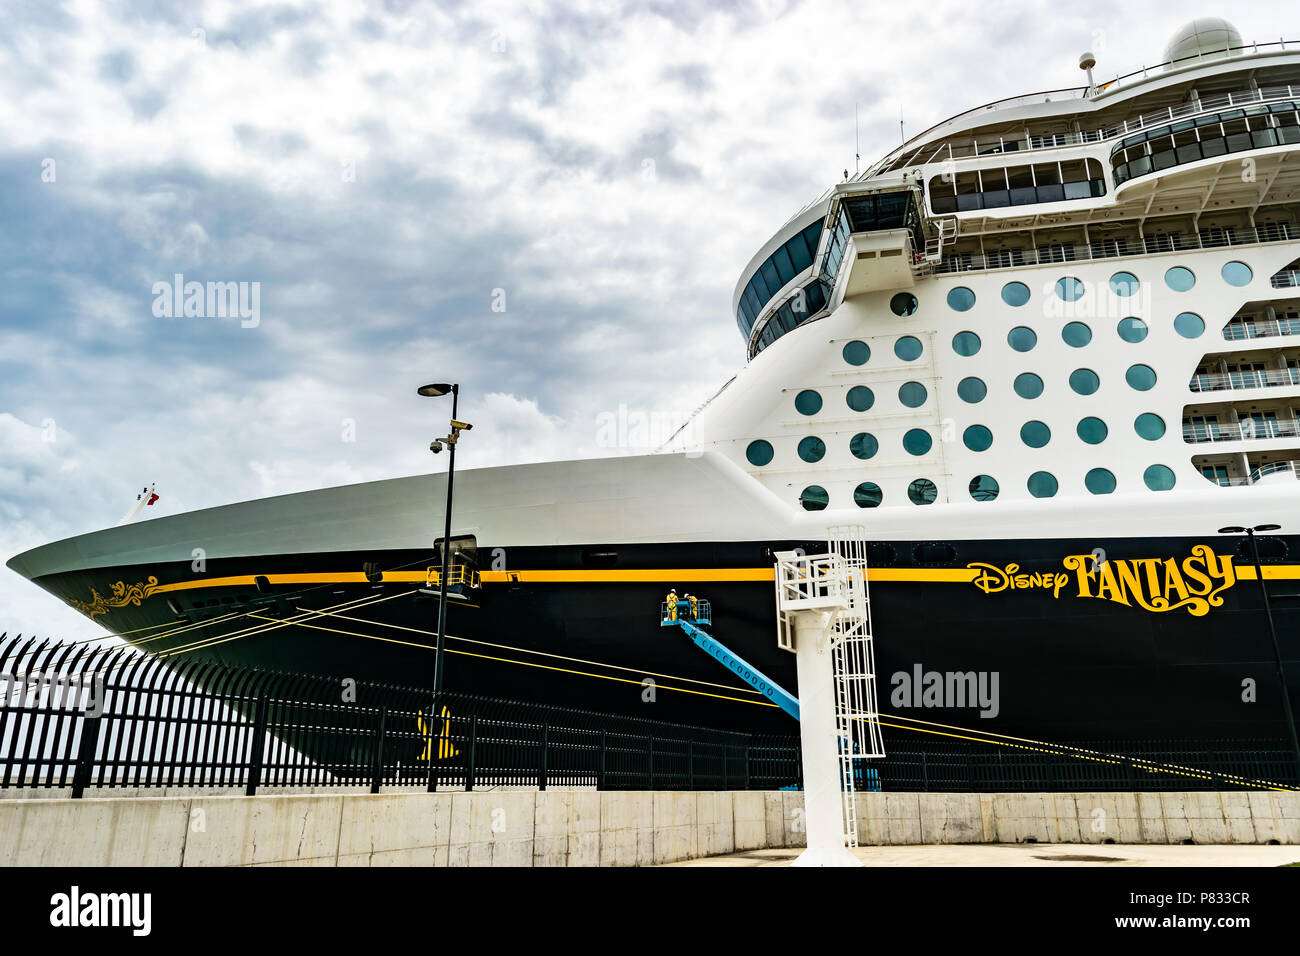 Falmouth, Jamaika - 03. Juni 2015: Disney Fantasy Kreuzfahrtschiff der Falmouth Cruise Port in Jamaika angedockt. Stockfoto